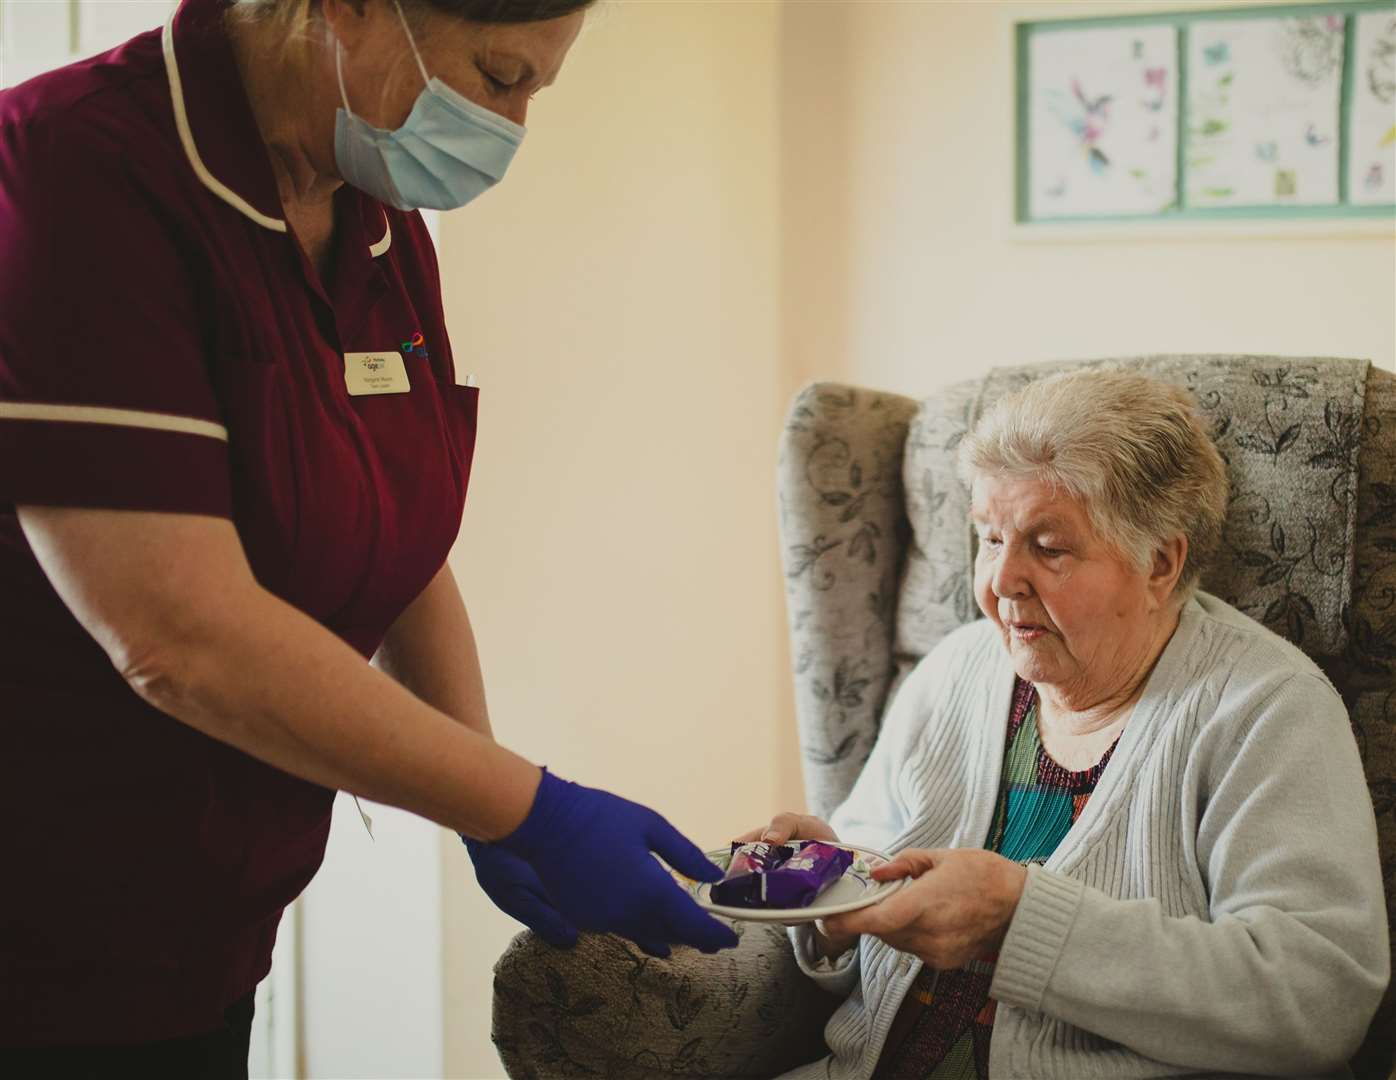 AgeUK Medway helps around 100 elderly people in Faversham. Photo: AgeUK Medway